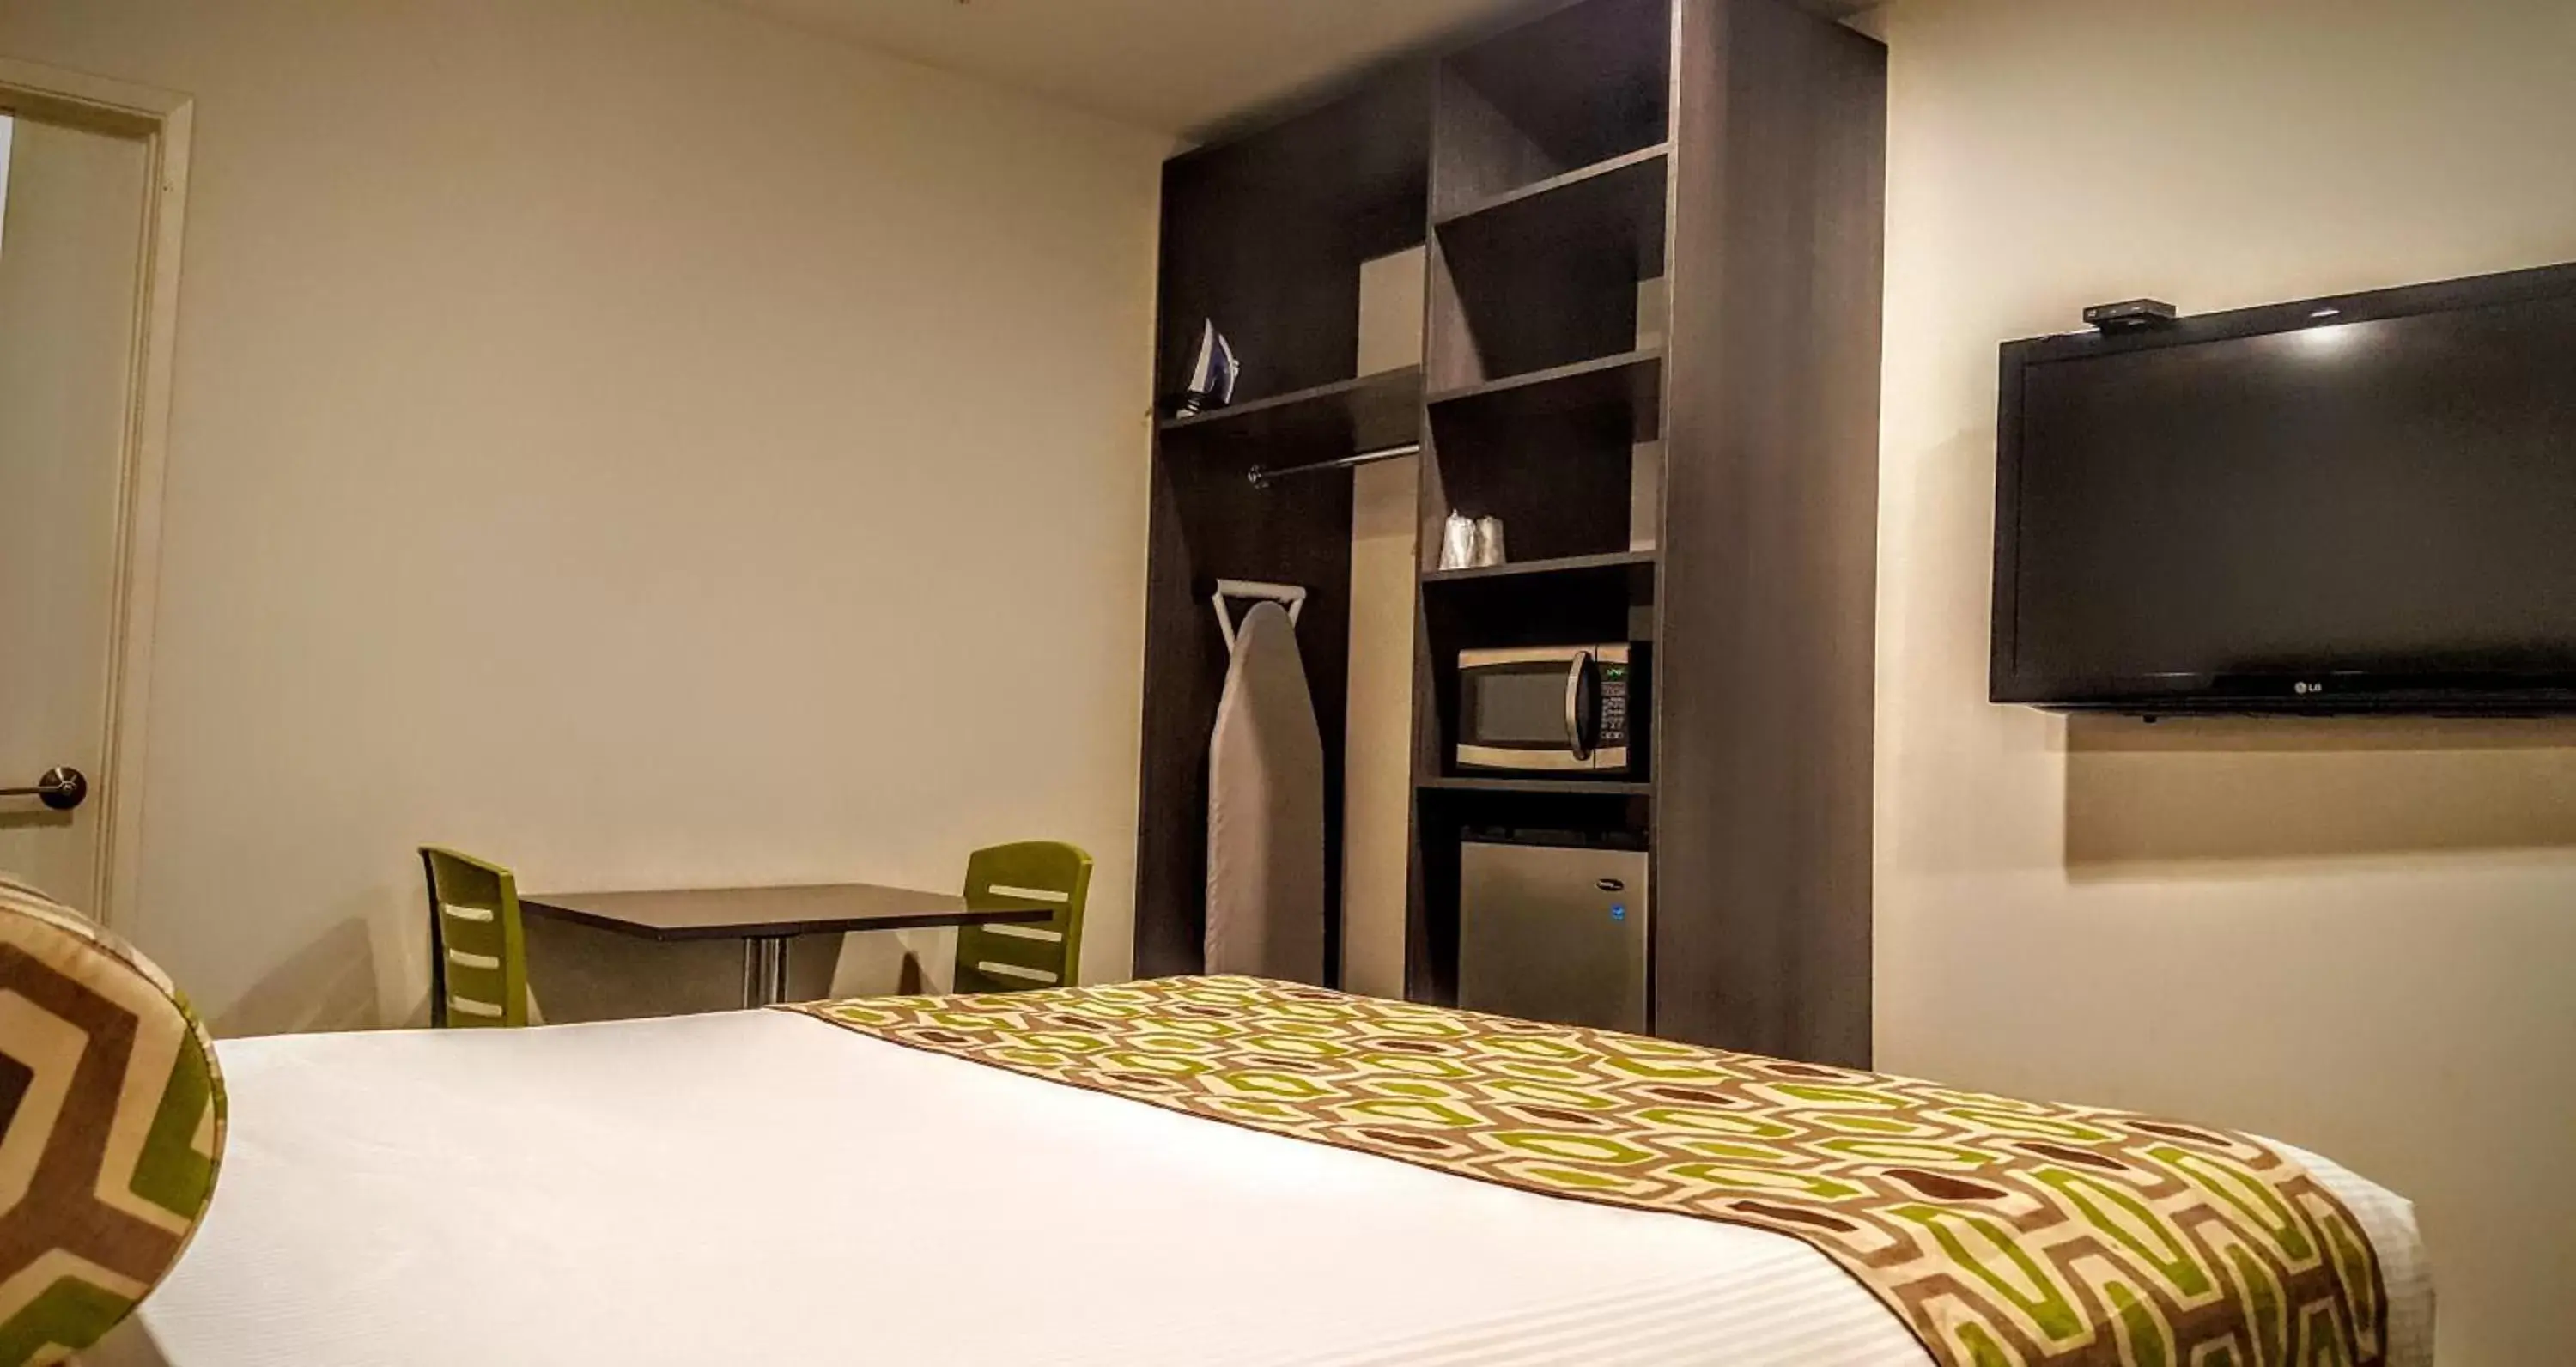 Area and facilities, Room Photo in Jewel City Inn